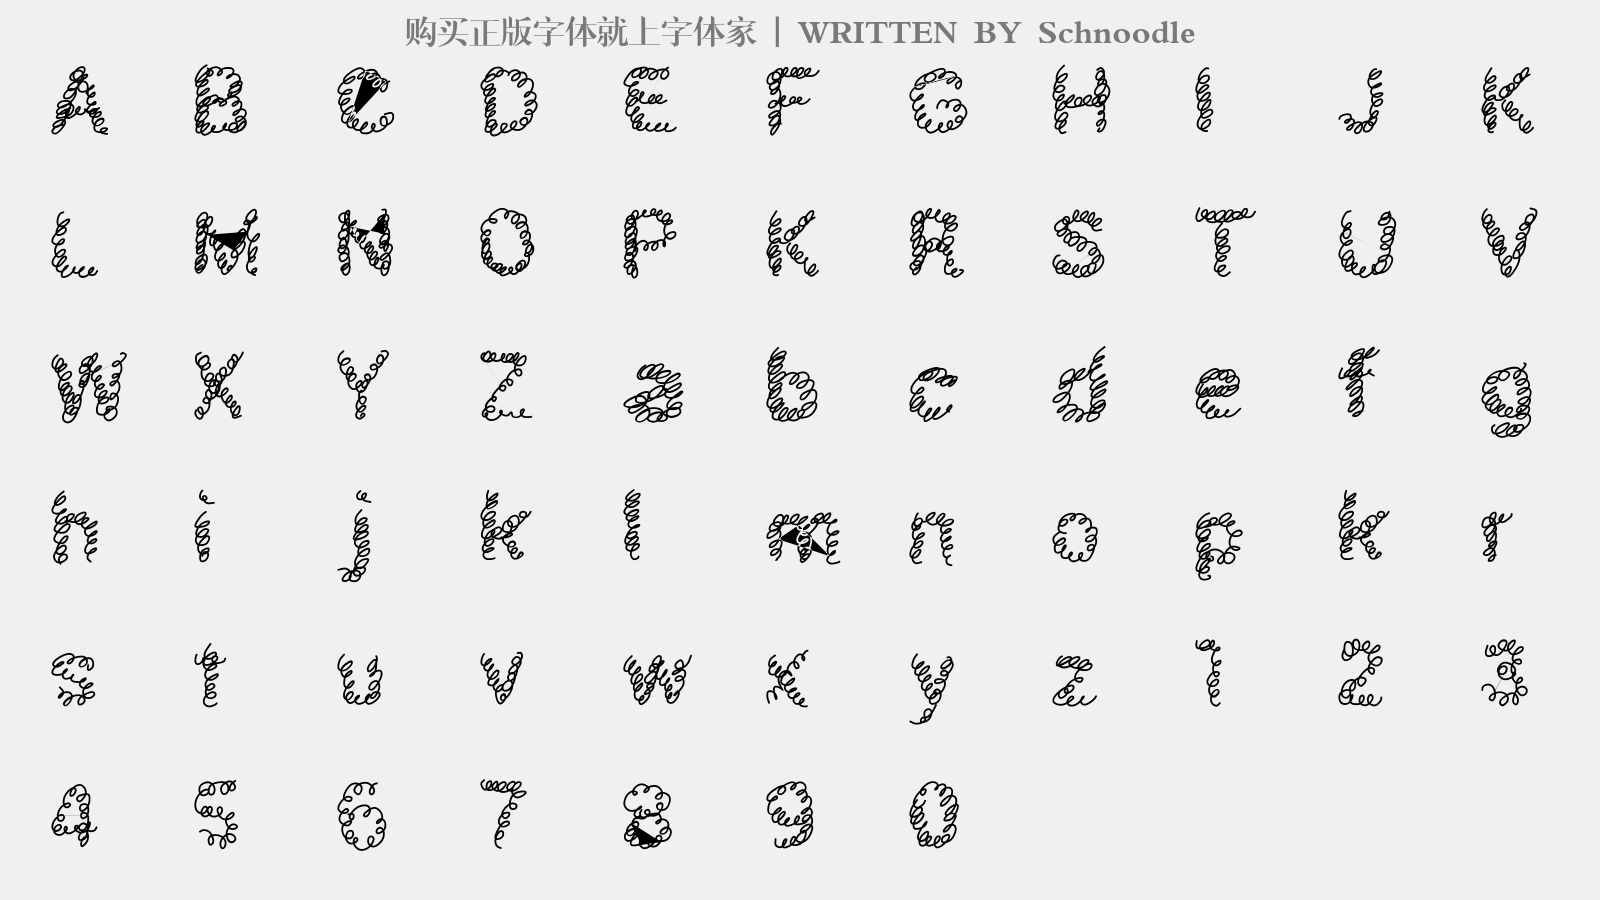 Schnoodle - 大写字母/小写字母/数字